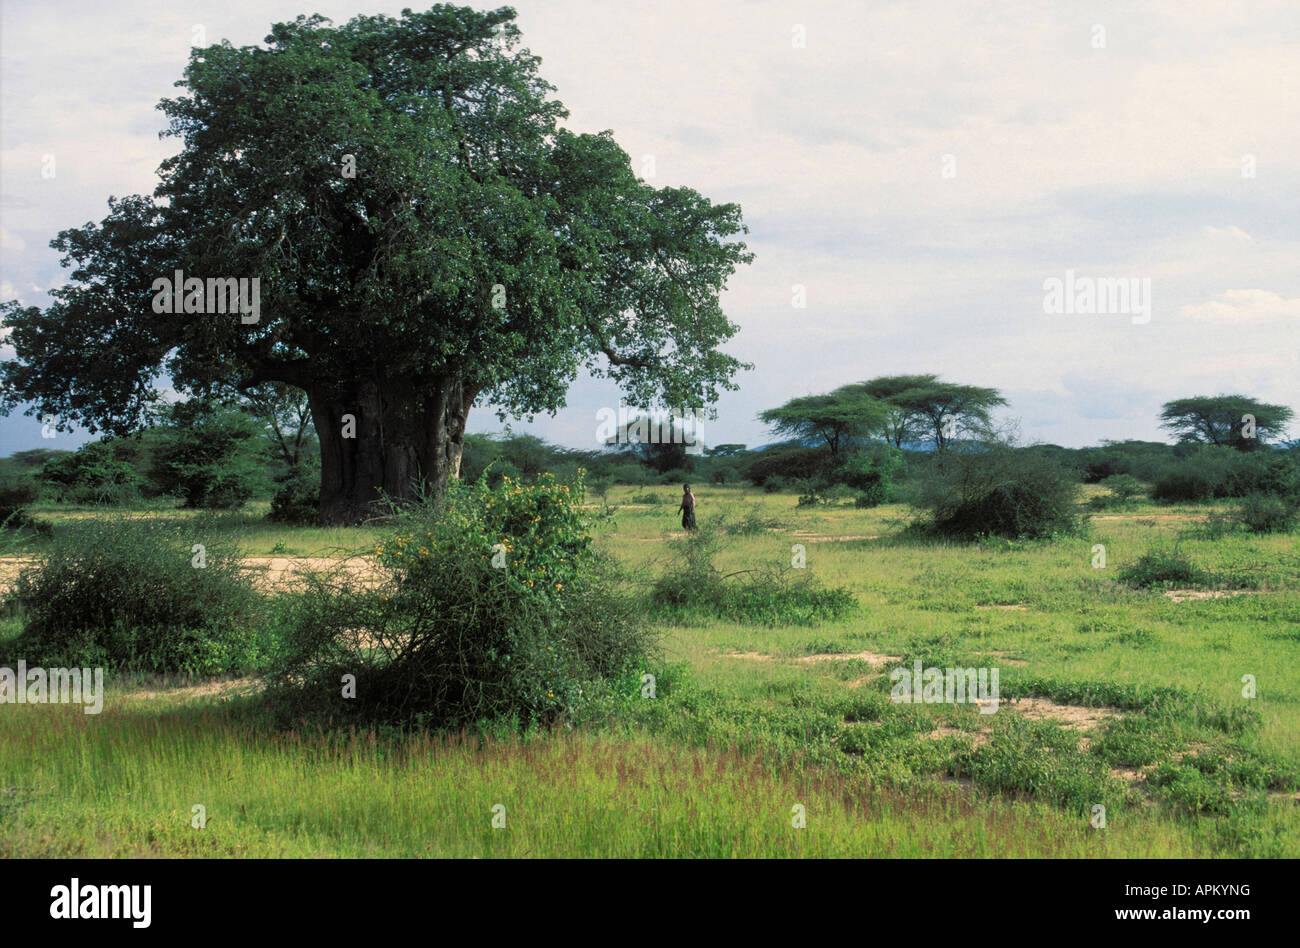 Indegenous tree in Tanzania, Dodoma District. Stock Photo